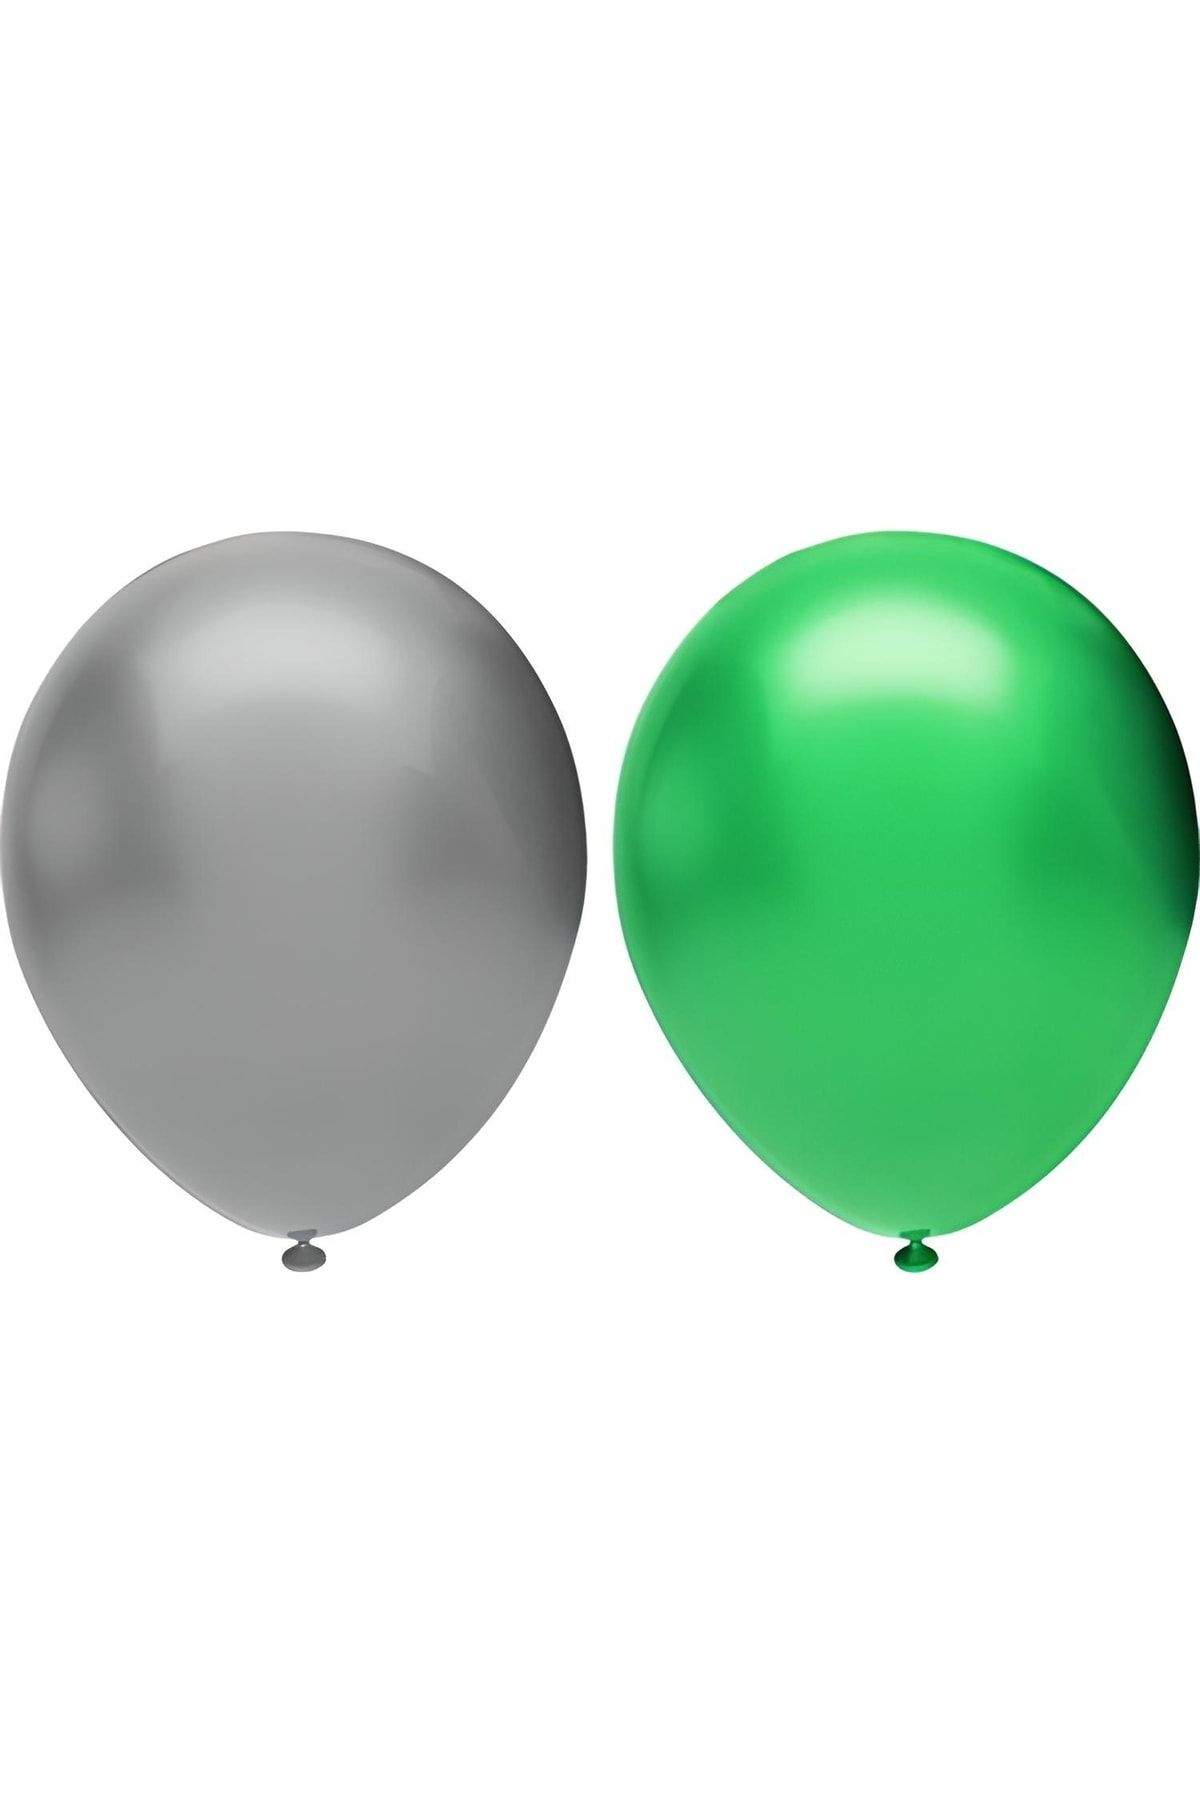 HKNYS 20 Adet Metalik Balon (koyu Yeşil - Gümüş(gri) )- Helyum Gazı Uyumludur.-dogum Günü Parti Balonları